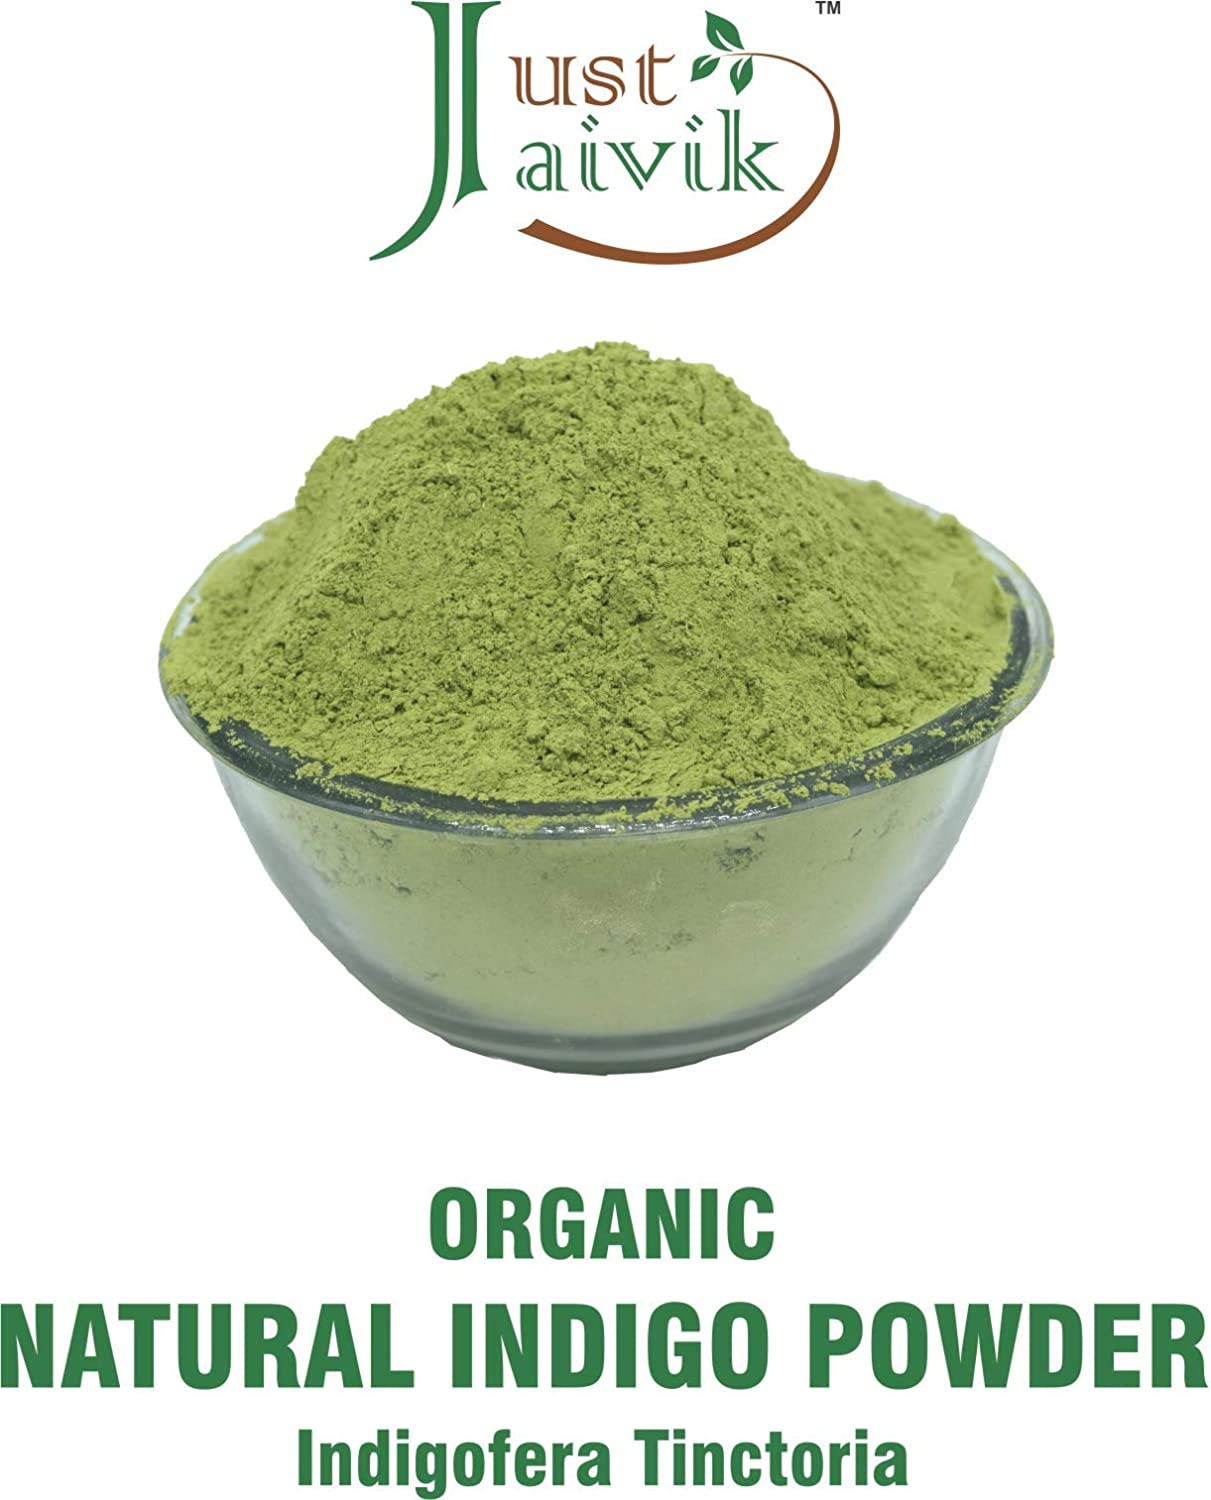 Just Jaivik 100% Organic Indigo Powder - 227 gms / 1/2 LB Pound / 08 Oz -  Indigofera Tinctoria- A 100% Organic Hair Dye - Color your hair dark brown  to black with Henna 